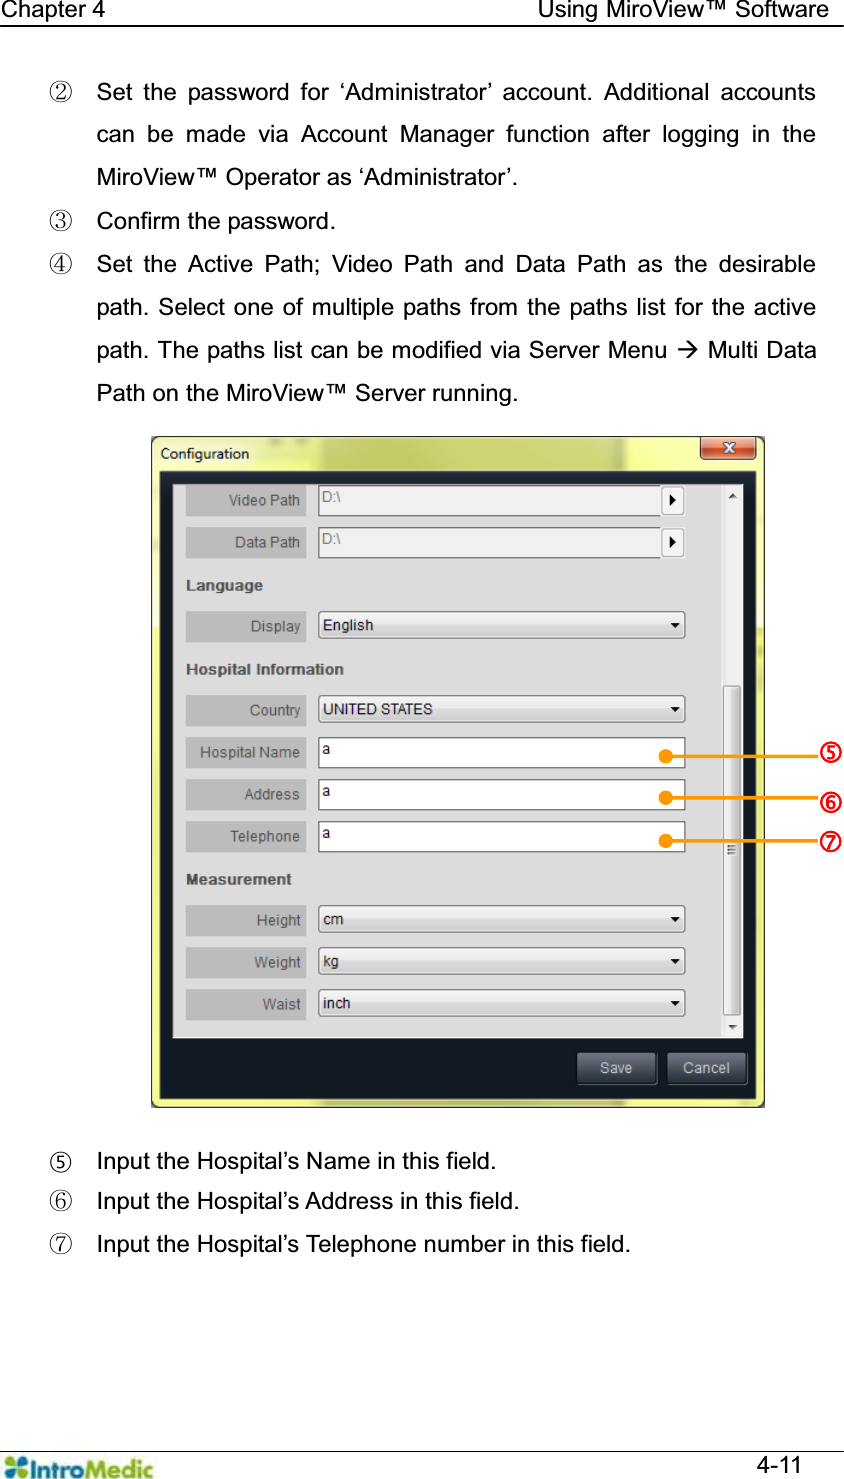   Chapter 4                                    Using 0LUR9LHZ Software  4-11 ཛྷ 6HW WKH SDVVZRUG IRU µ$GPLQLVWUDWRU¶ DFFRXQW $GGLWLRQDO DFFRXQWVcan be made via Account Manager function after logging in the 0LUR9LHZ2SHUDWRUDVµ$GPLQLVWUDWRU¶ ཝ  Confirm the password. ཞ  Set the Active Path; Video Path and Data Path as the desirable path. Select one of multiple paths from the paths list for the active path. The paths list can be modified via Server Menu Æ Multi Data Path on the 0LUR9LHZServer running.  § ,QSXWWKH+RVSLWDO¶V1DPHLQWKLVILHOG འ ,QSXWWKH+RVSLWDO¶VAddress in this field. ཡ ,QSXWWKH+RVSLWDO¶V7HOHSKRQHQXPEHULQWKLVILHOG g h i 